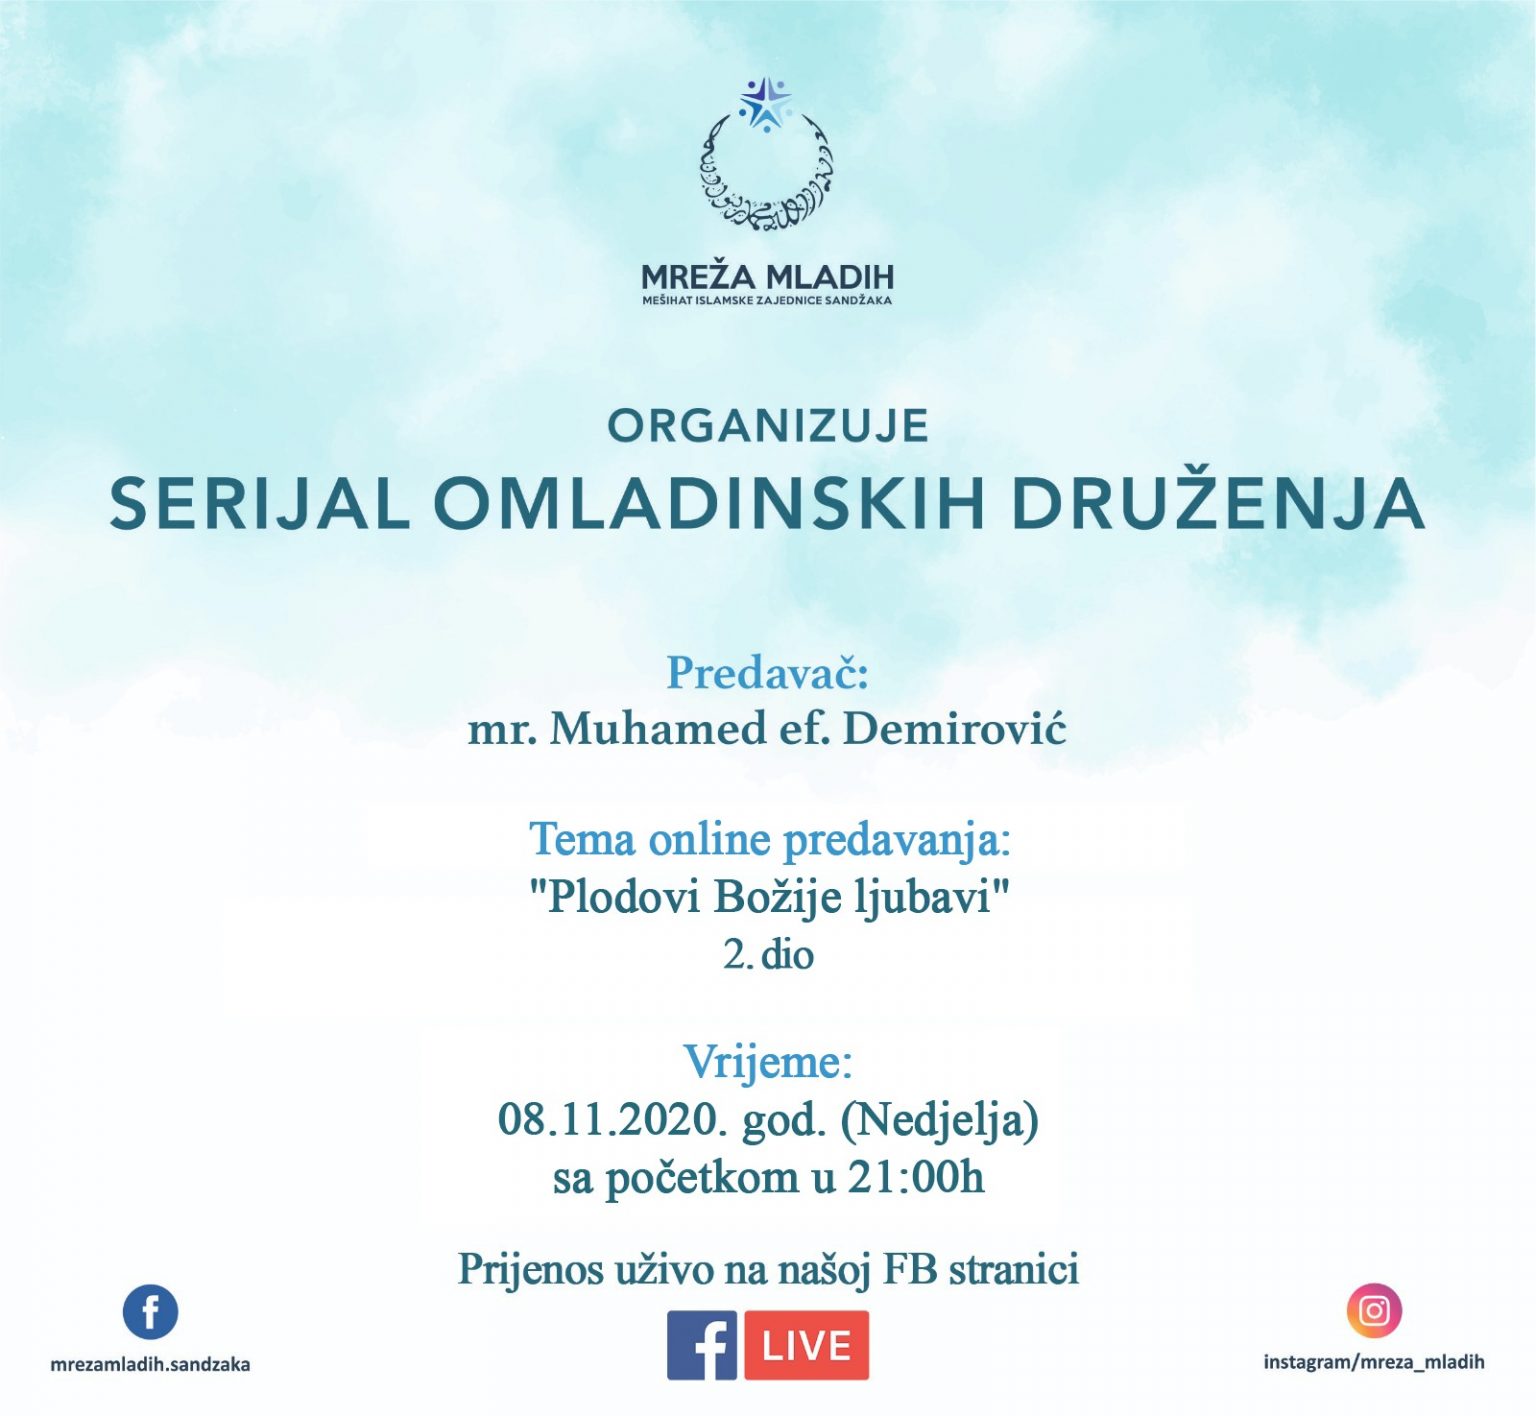 Mr. Muhamed ef. Demirović gost online predavanja na temu: “Plodovi Božije ljubavi”